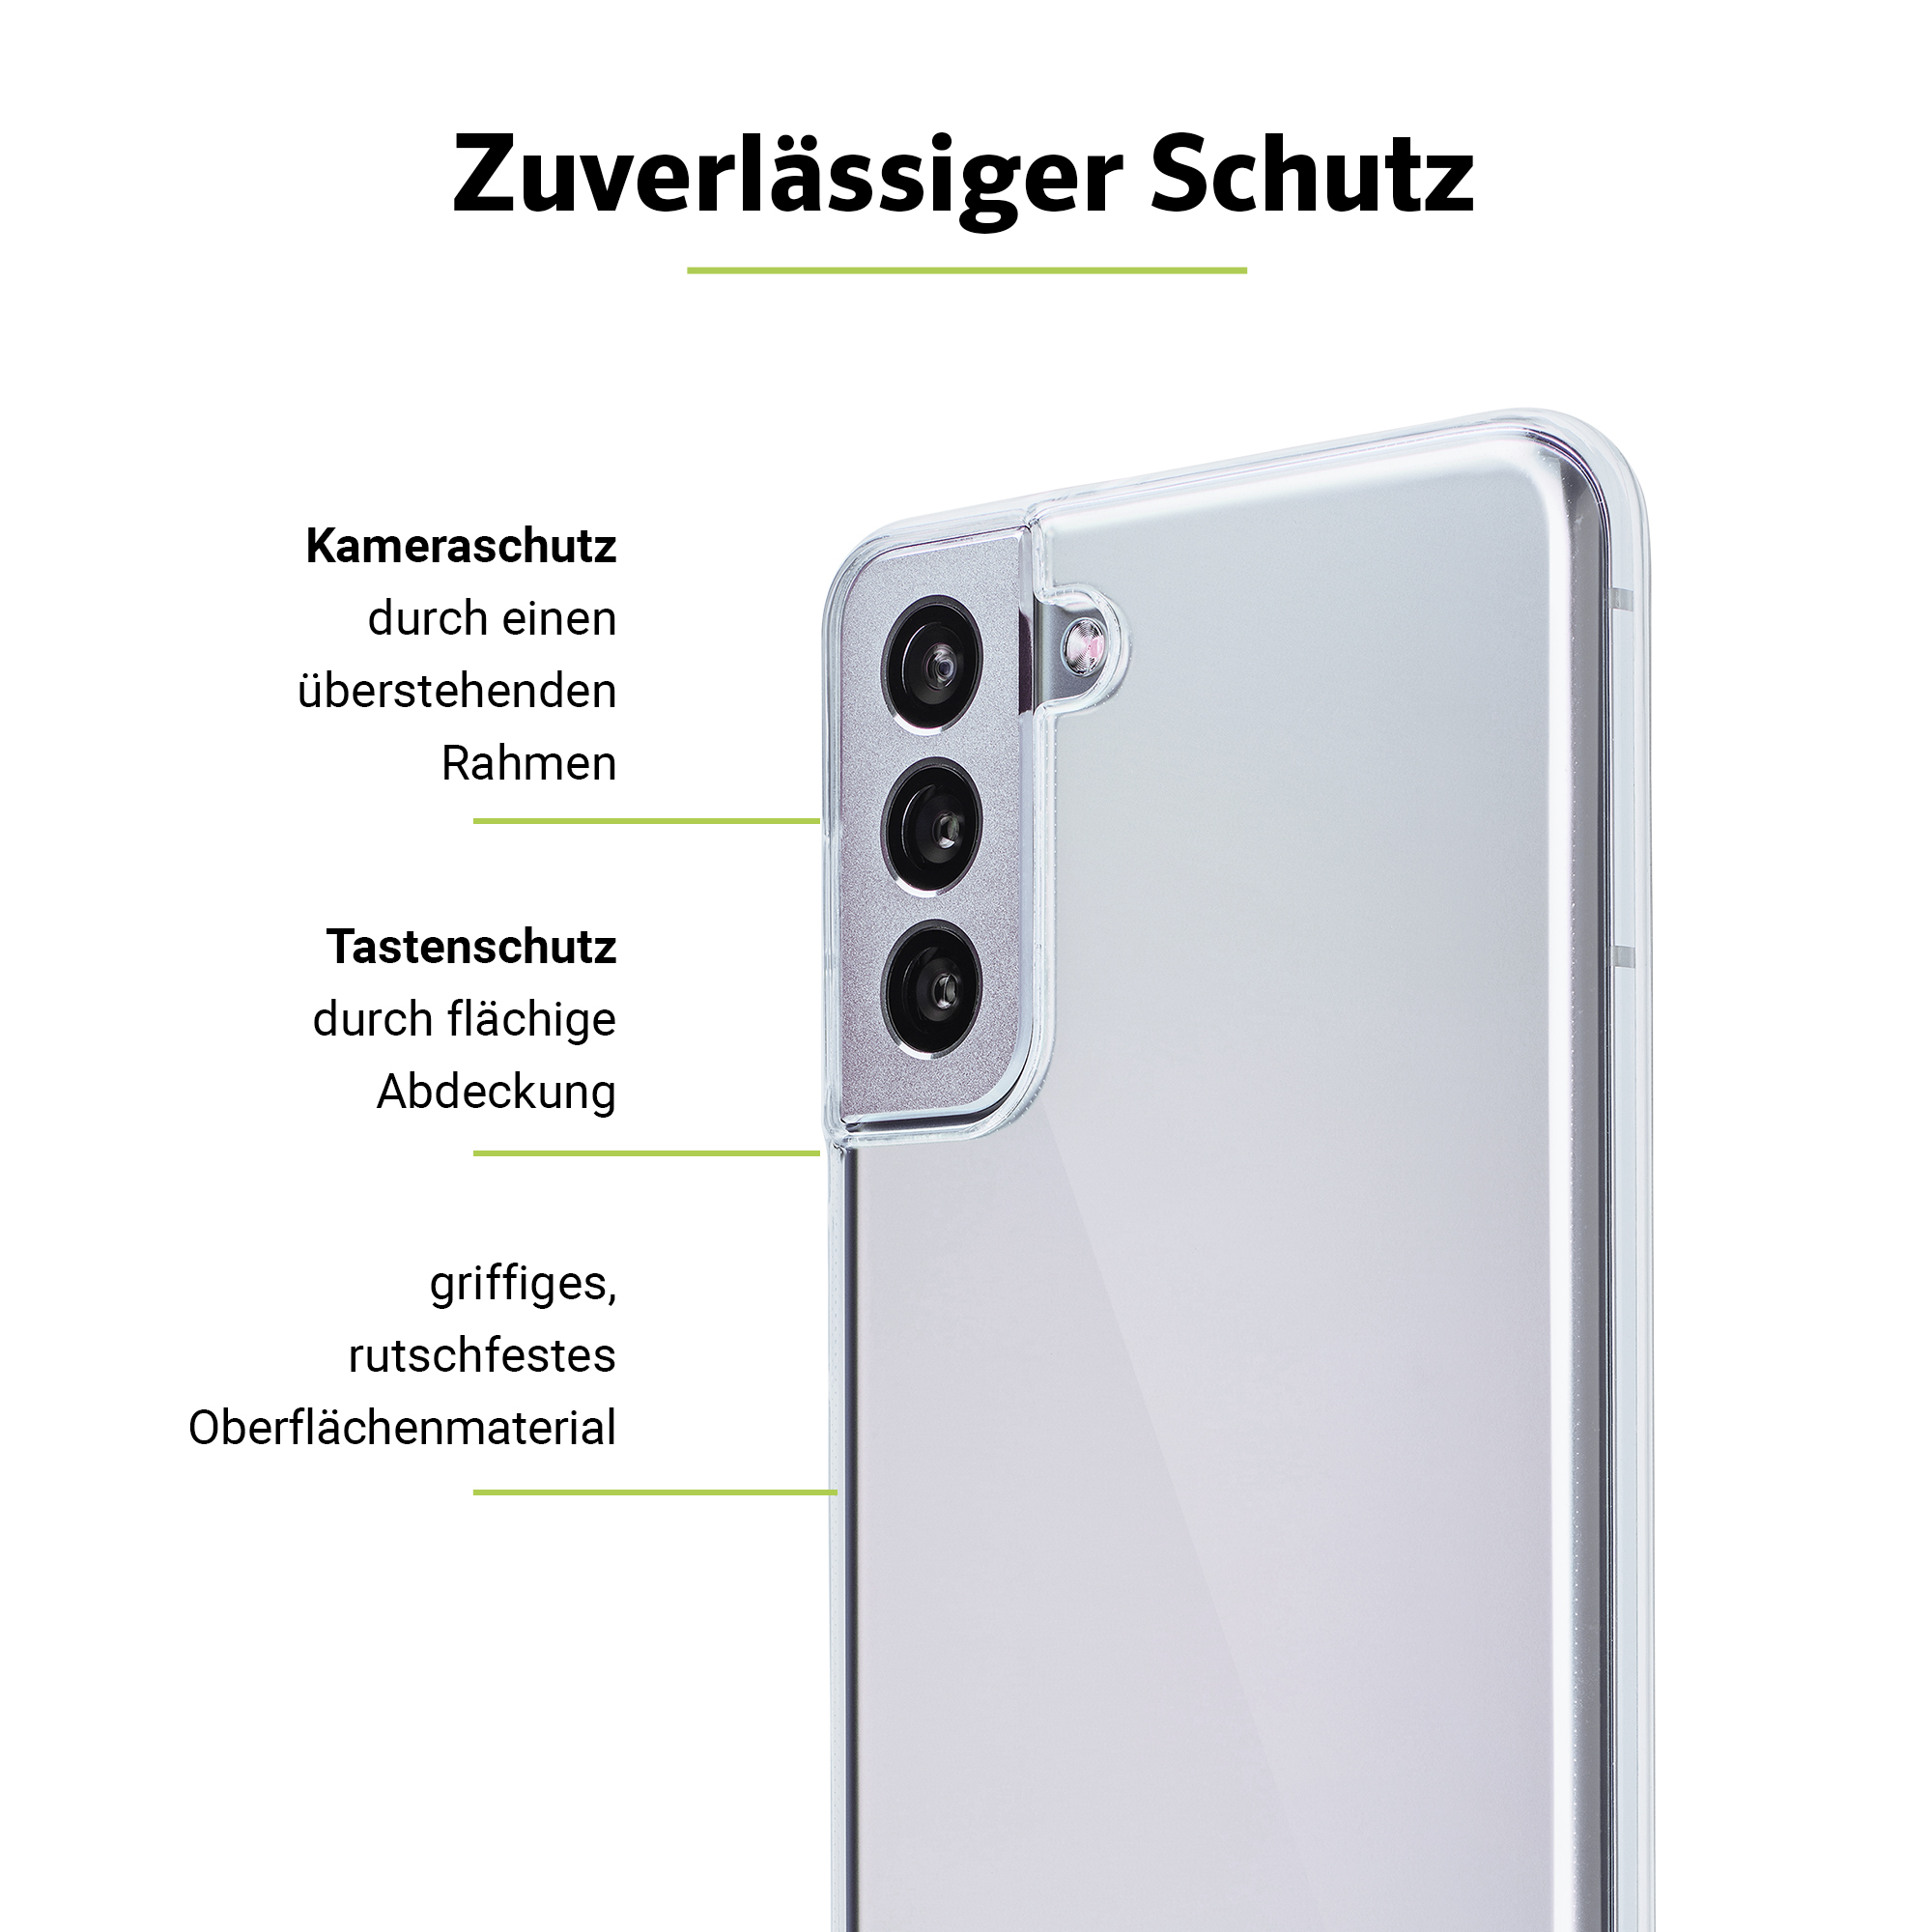 Galaxy Samsung, Basic Transparent Case, ARTWIZZ Clear Backcover, (4G), A13